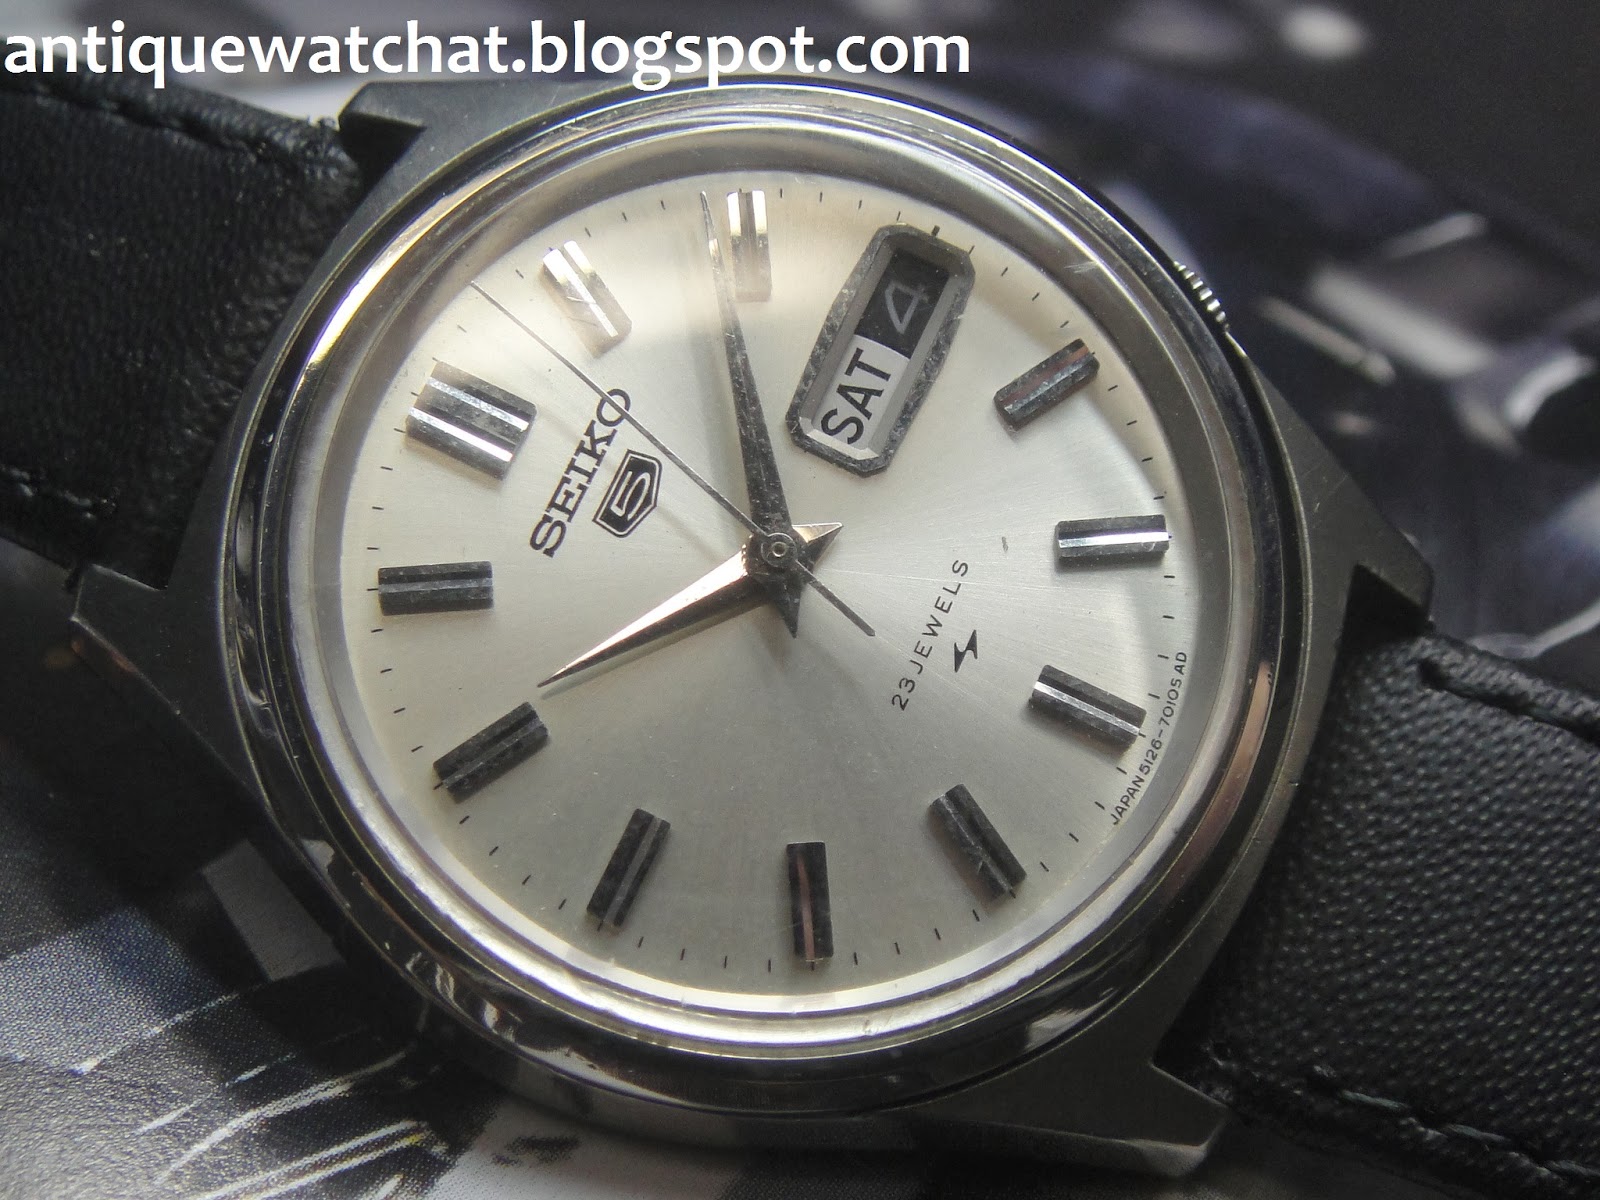 Antique Watch Bar: SEIKO 5 AUTOMATIC 5126-7010 S5A52